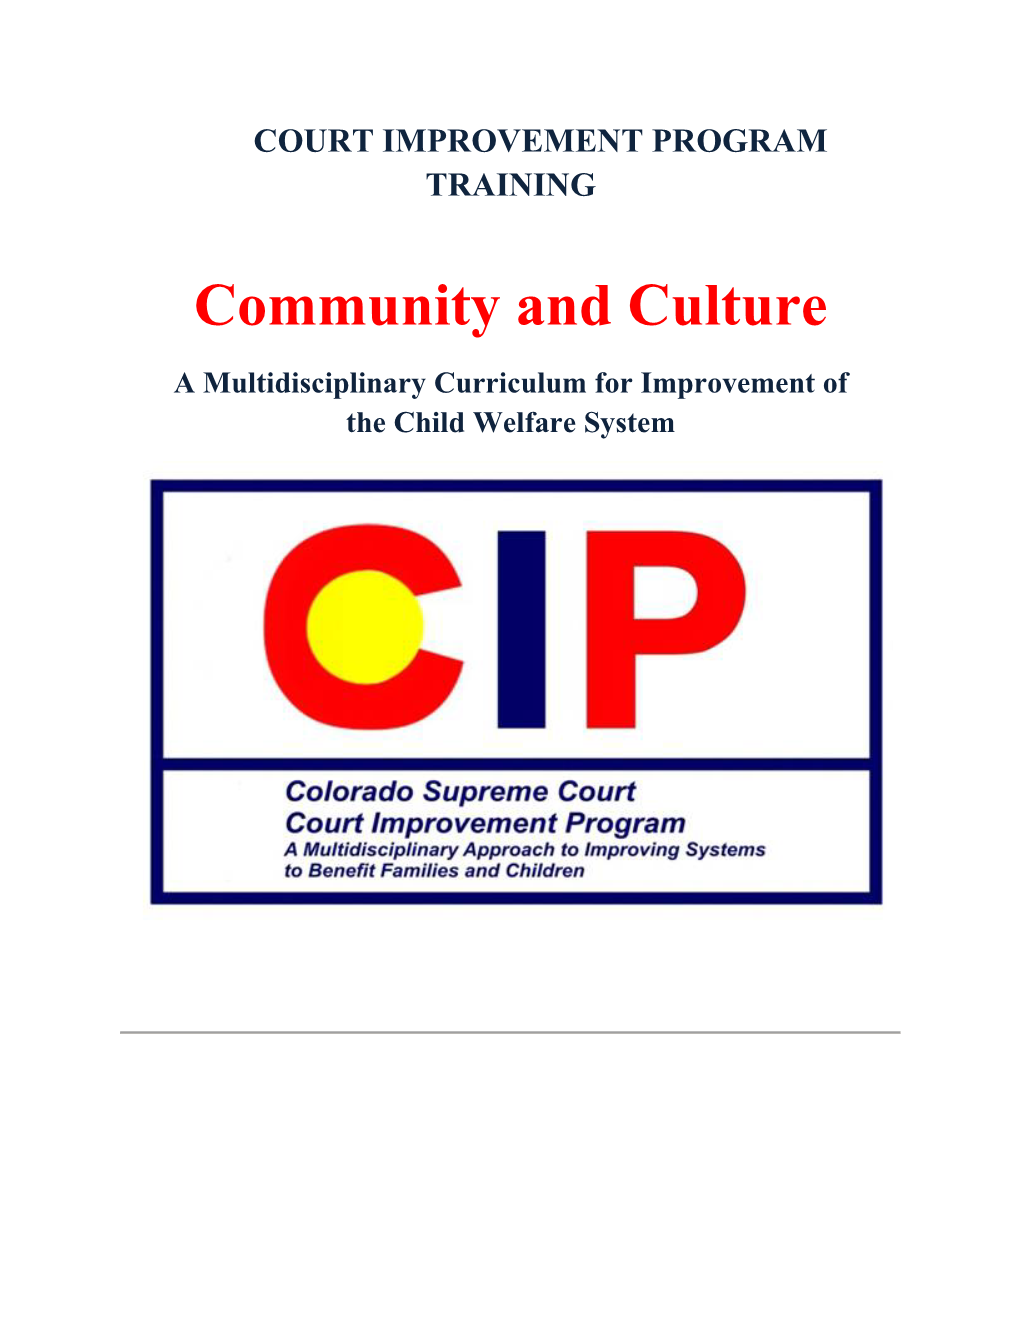 Community and Culture Court Improvement Program Training